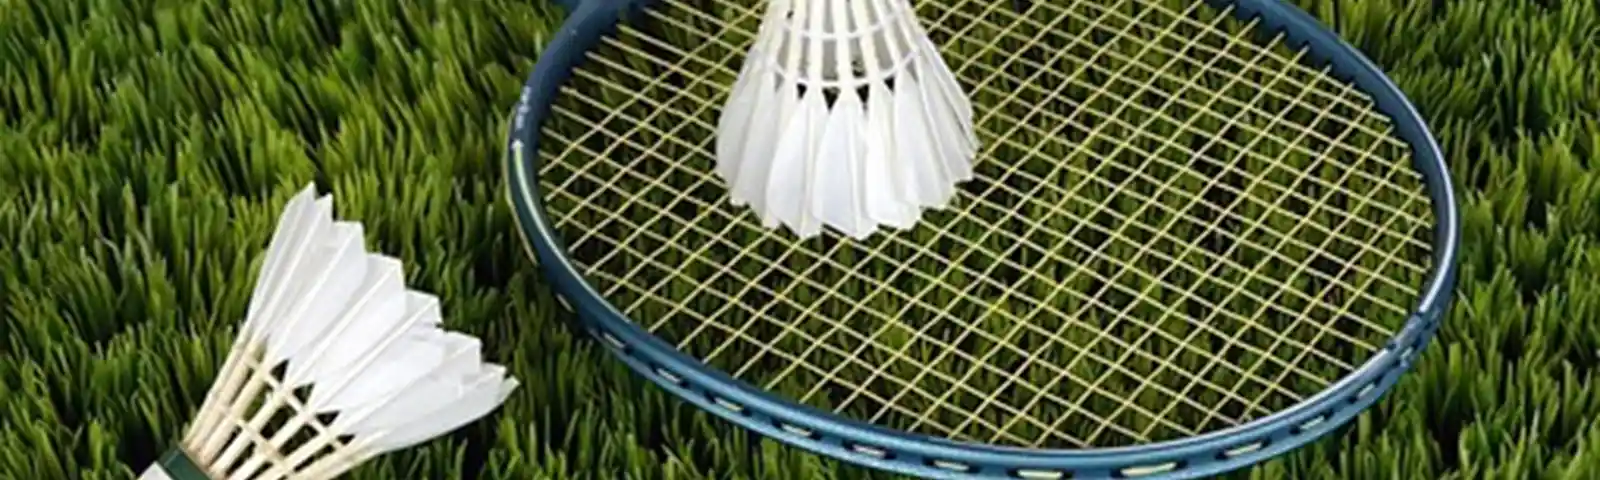 Badminton - 4.jpg